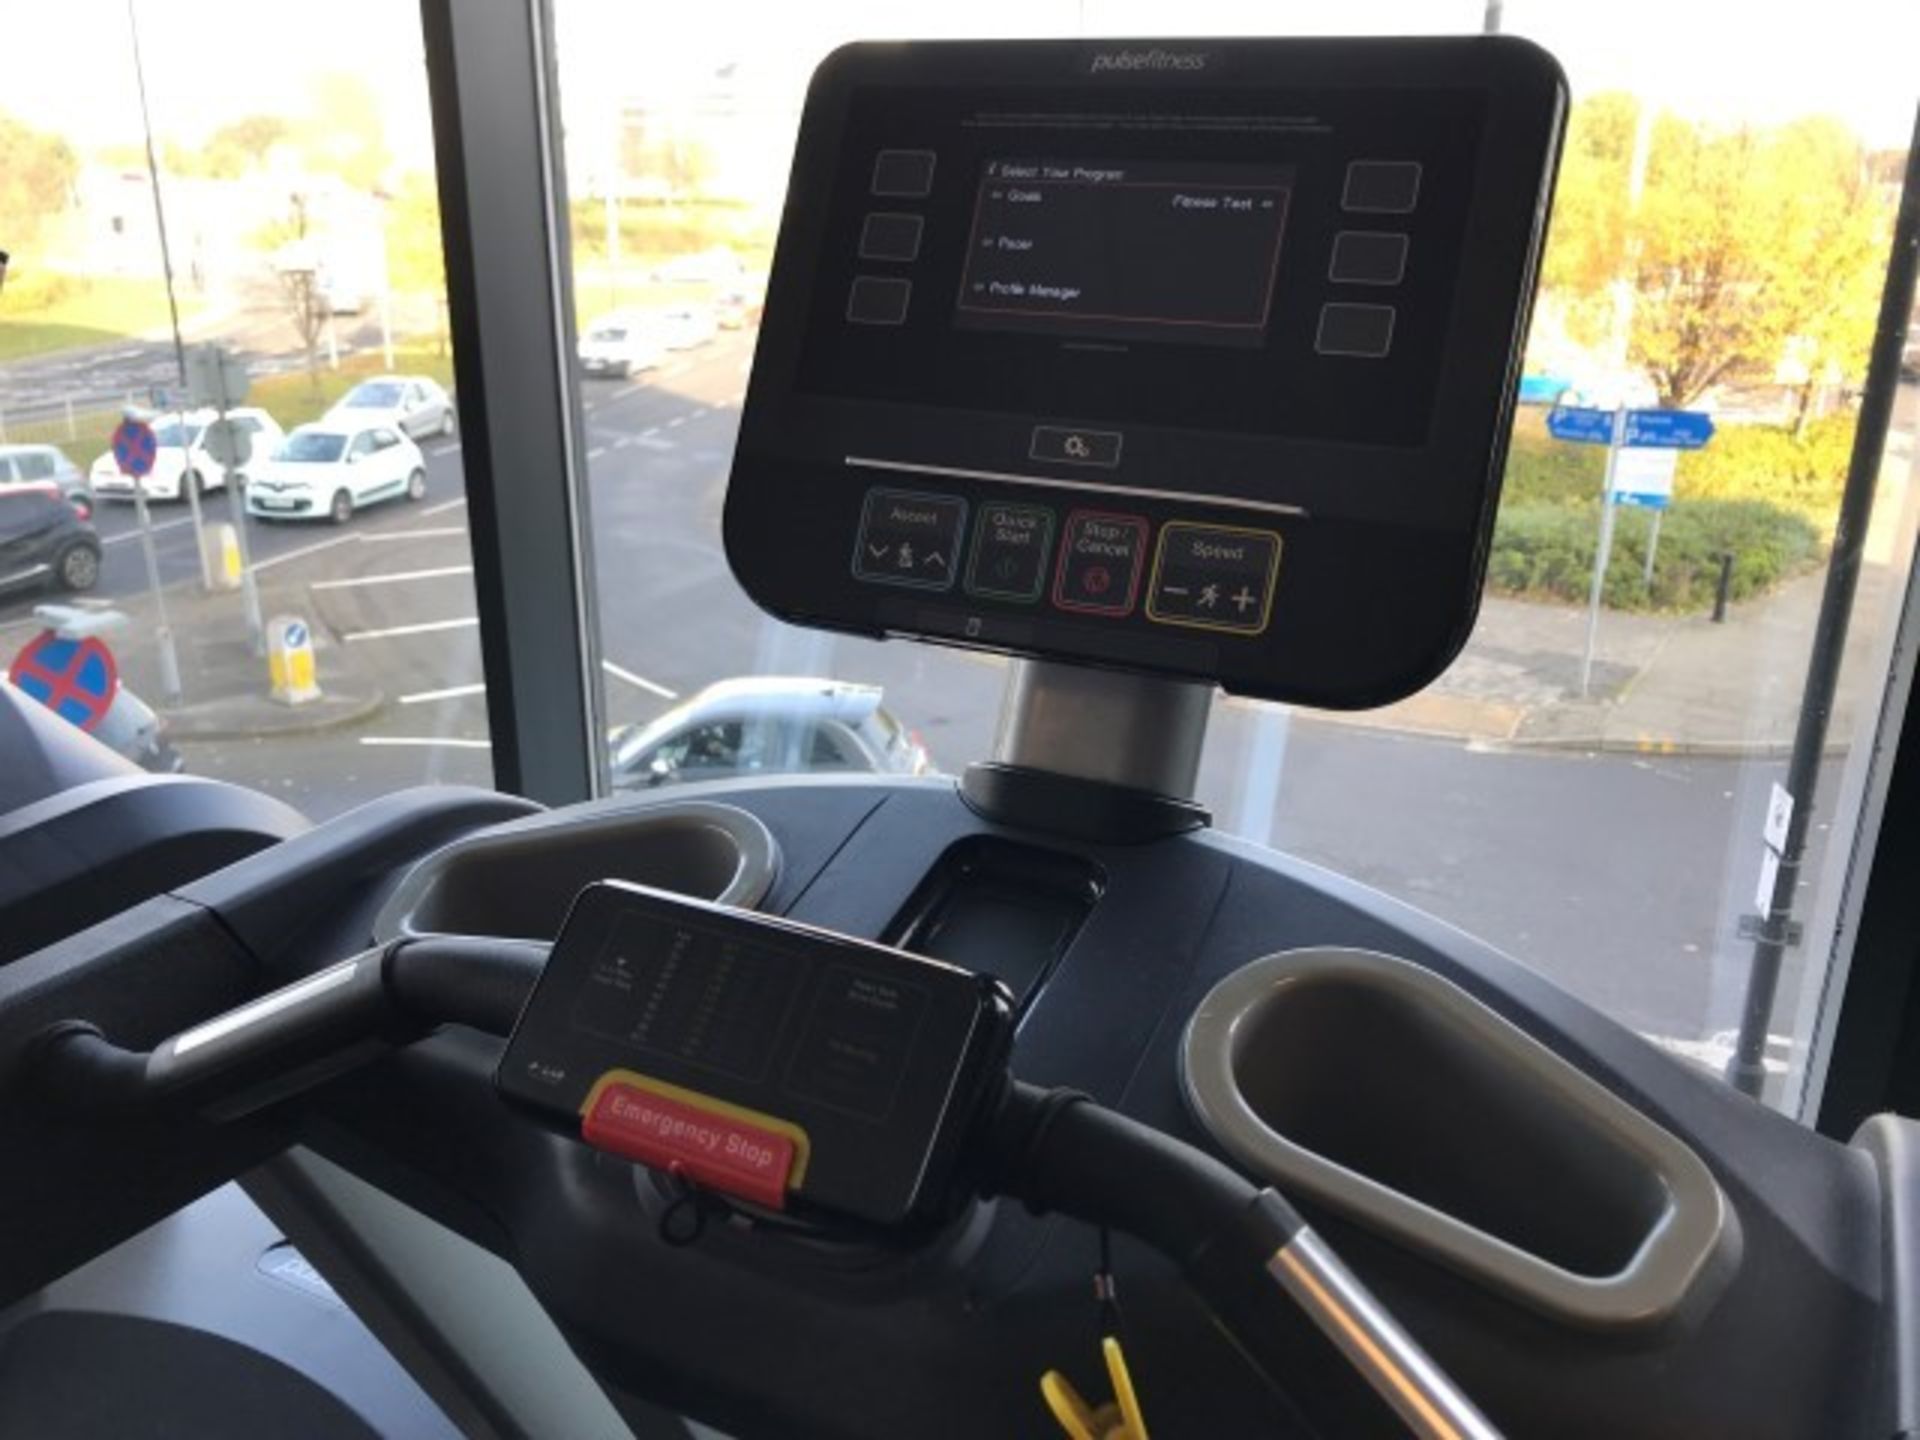 Pulse Fitness 260G treadmill (2016) - Image 2 of 3